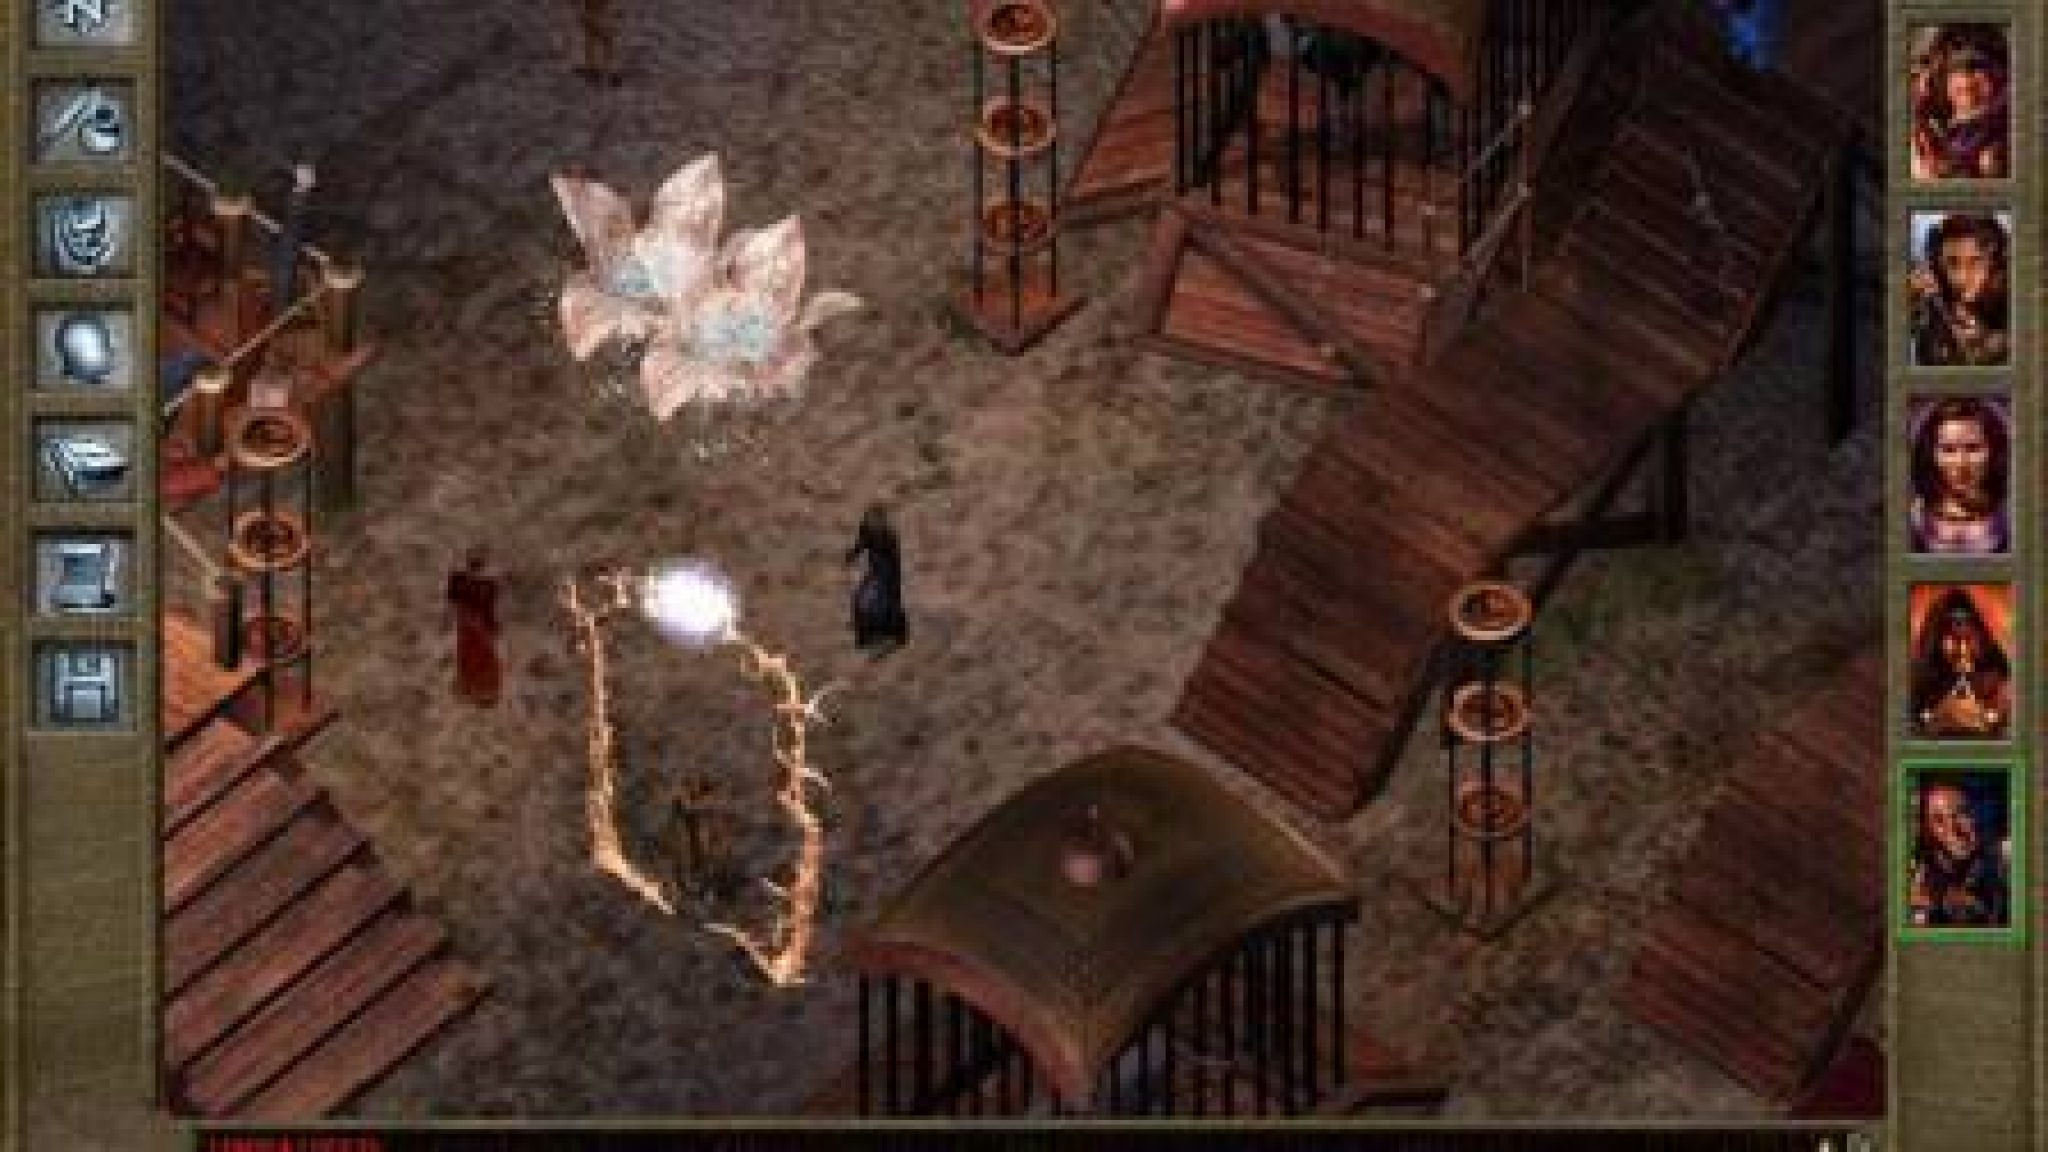 Baldur’s Gate III free downloads